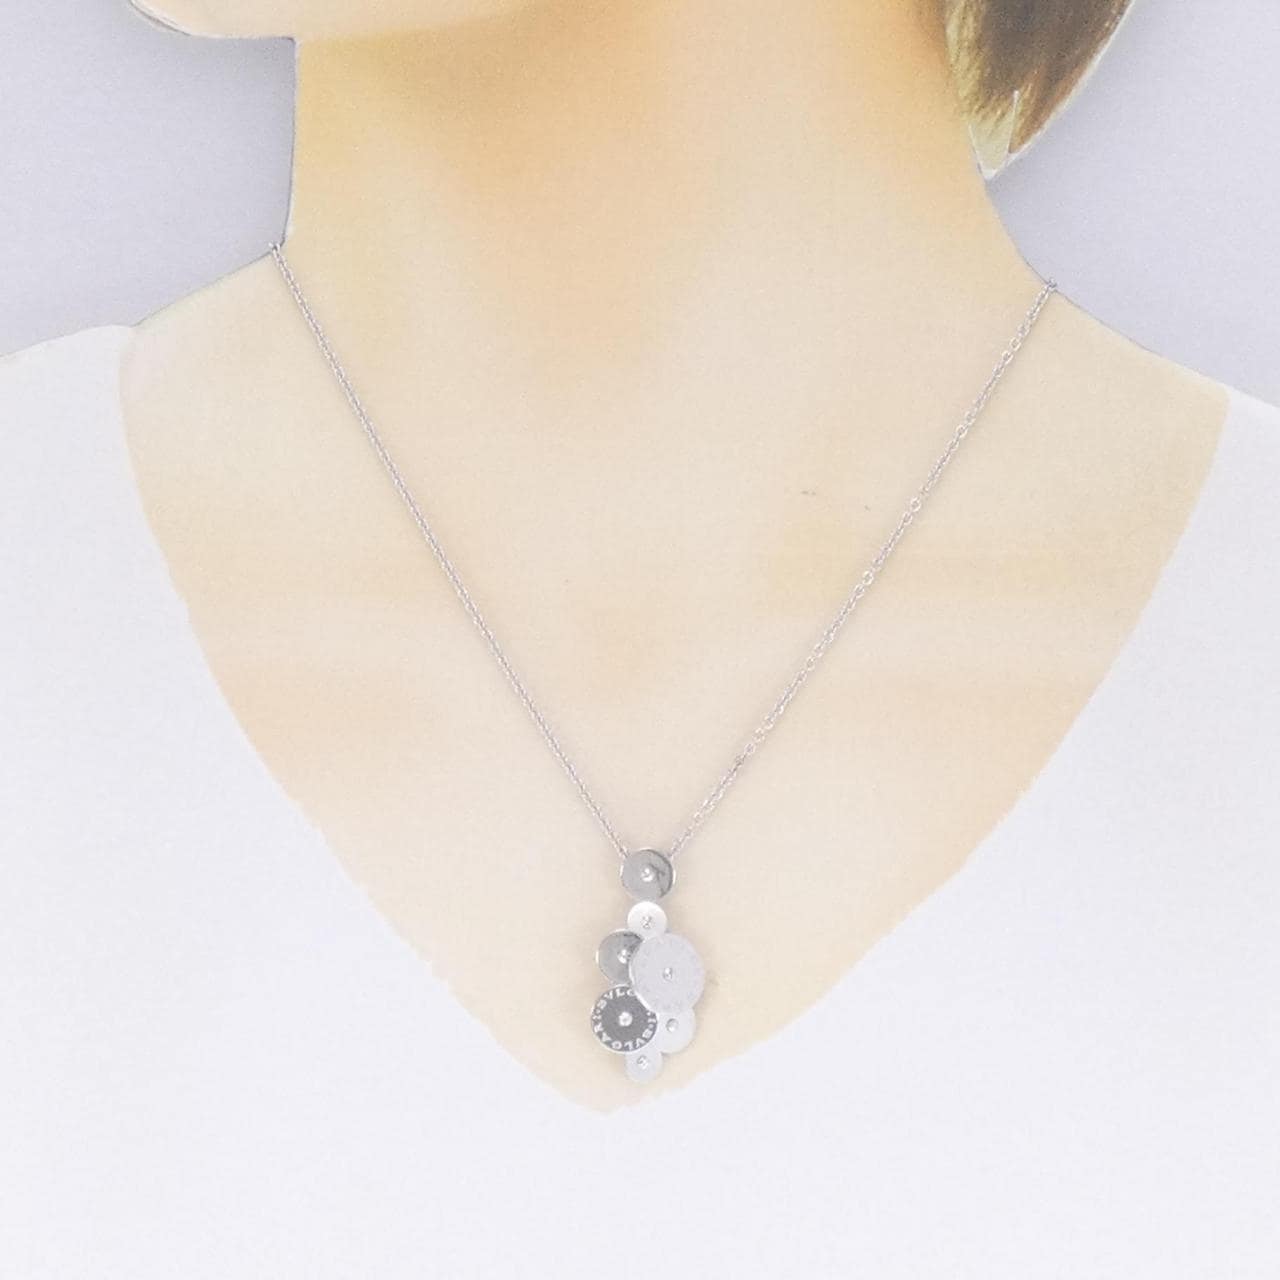 BVLGARI cichlady petite model necklace